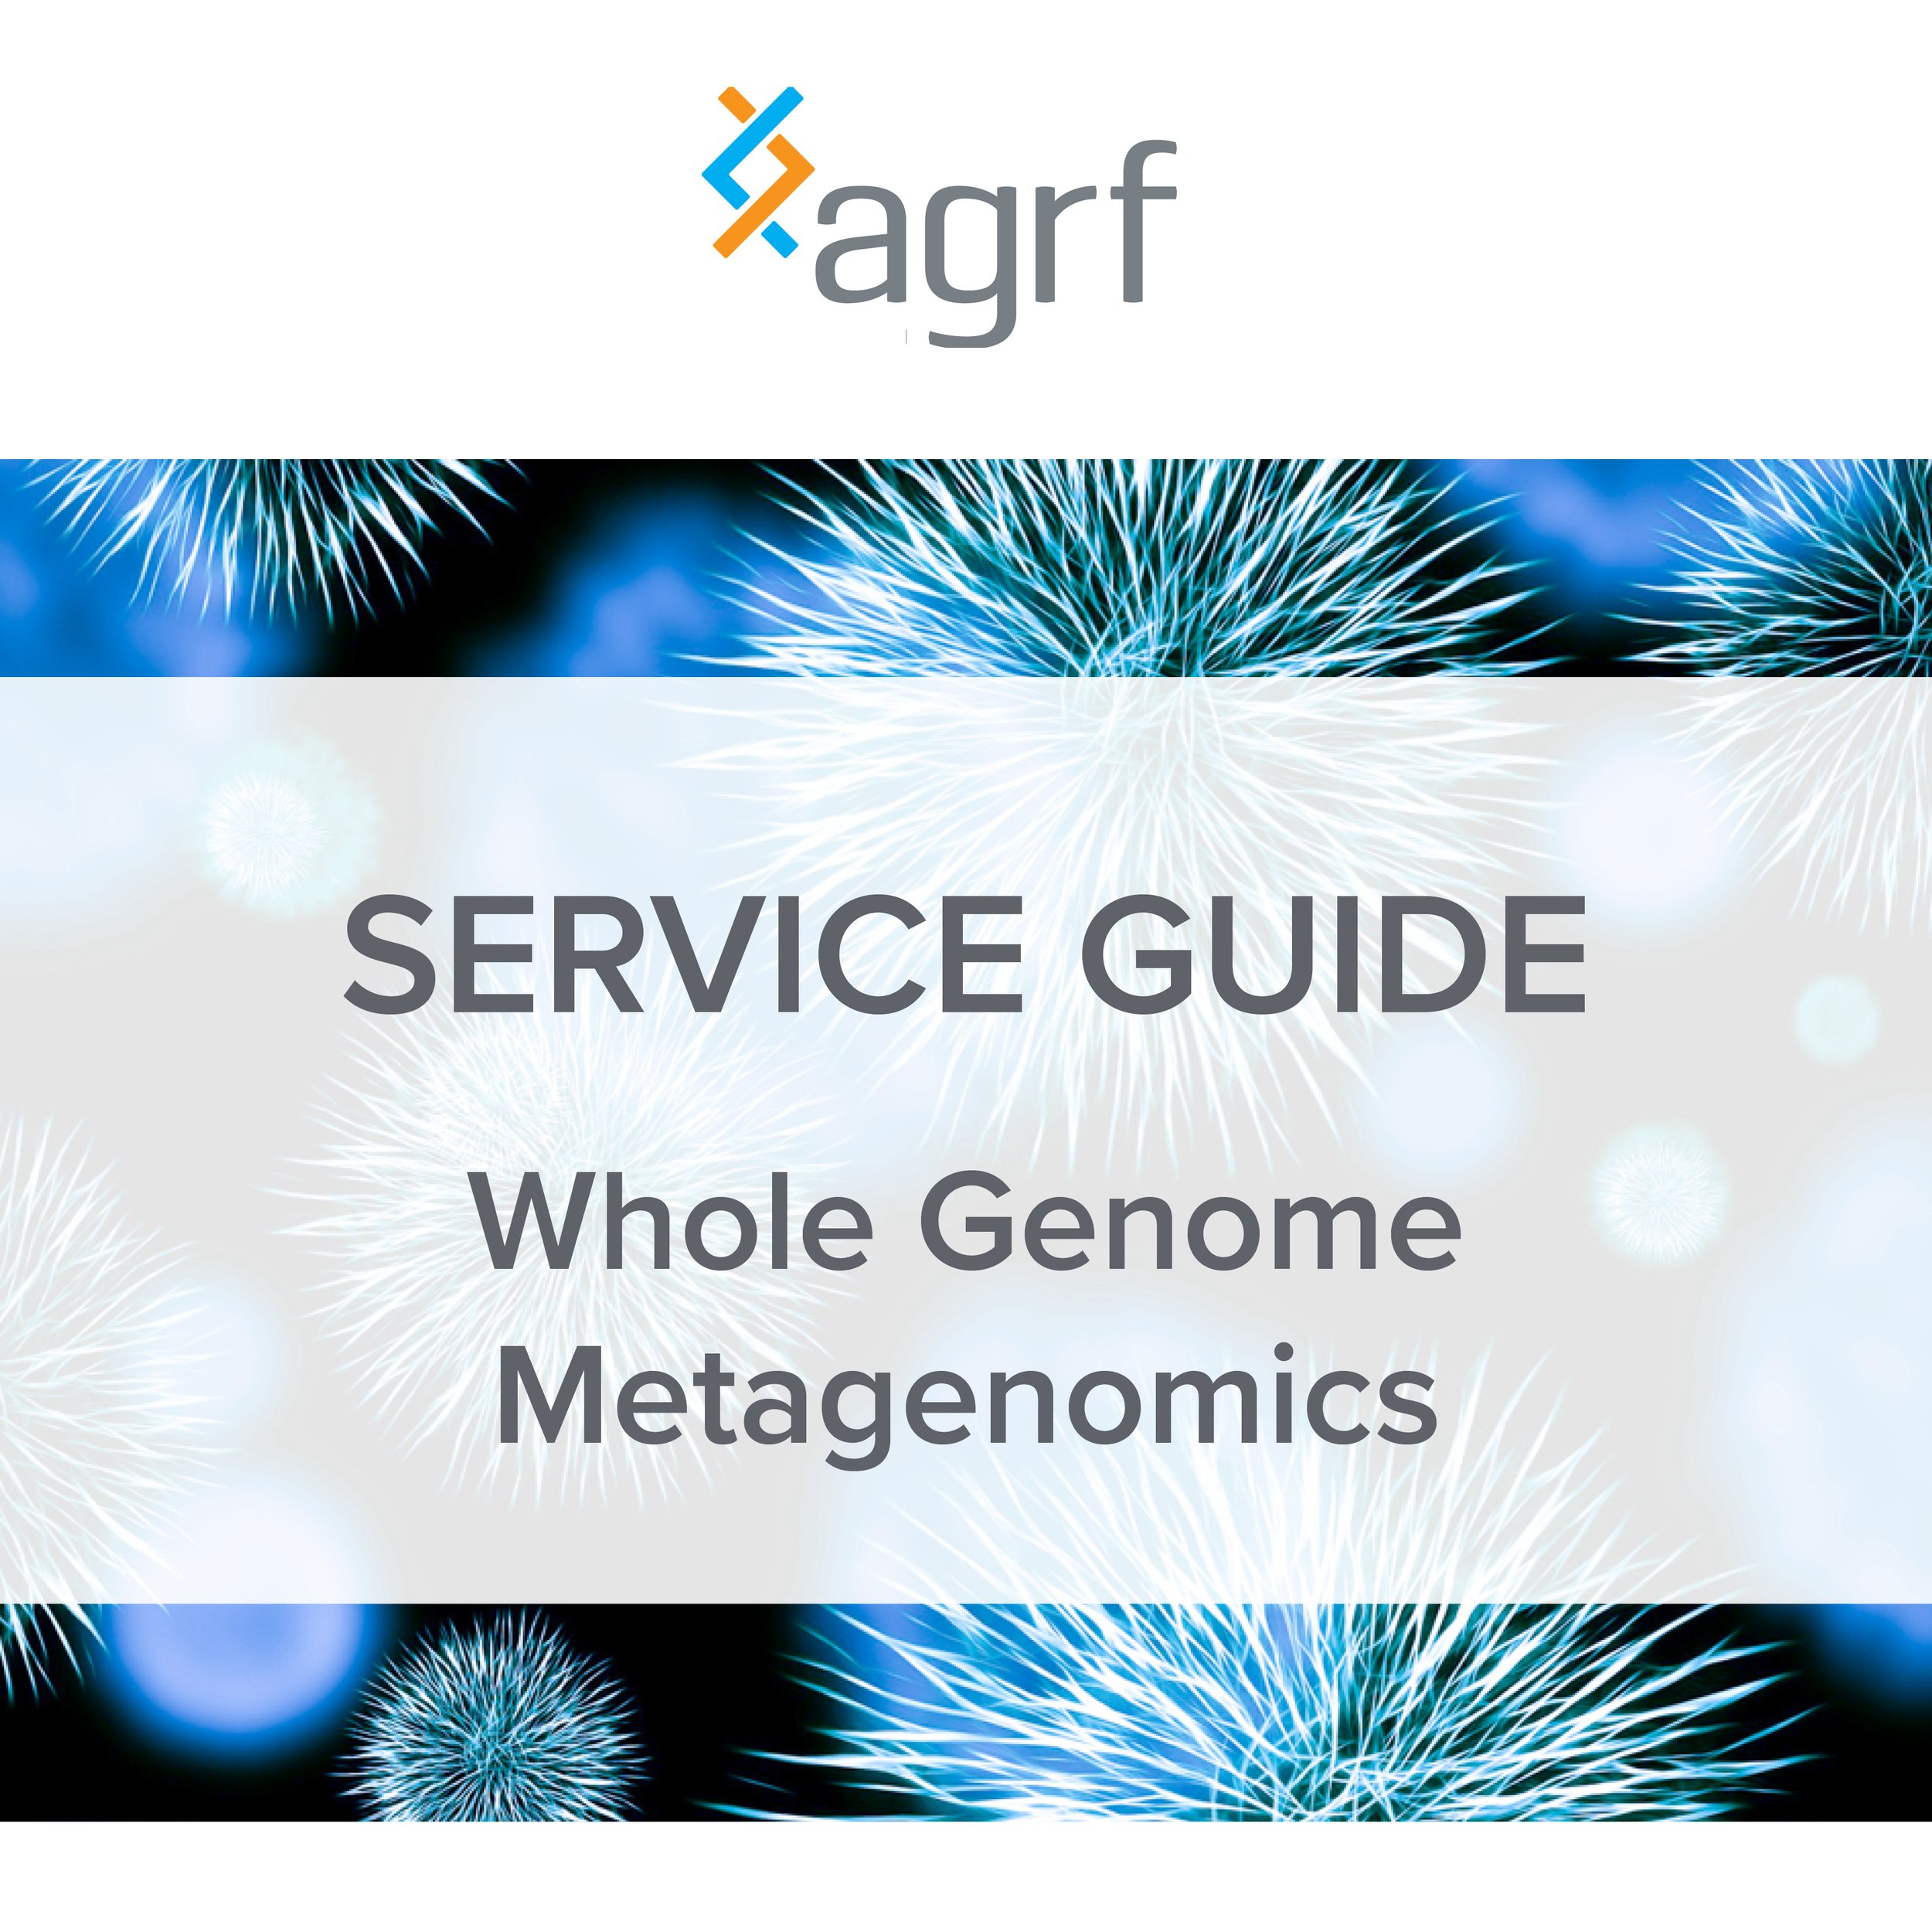 Web Tile_Whole-Genome Metagenomics.jpg